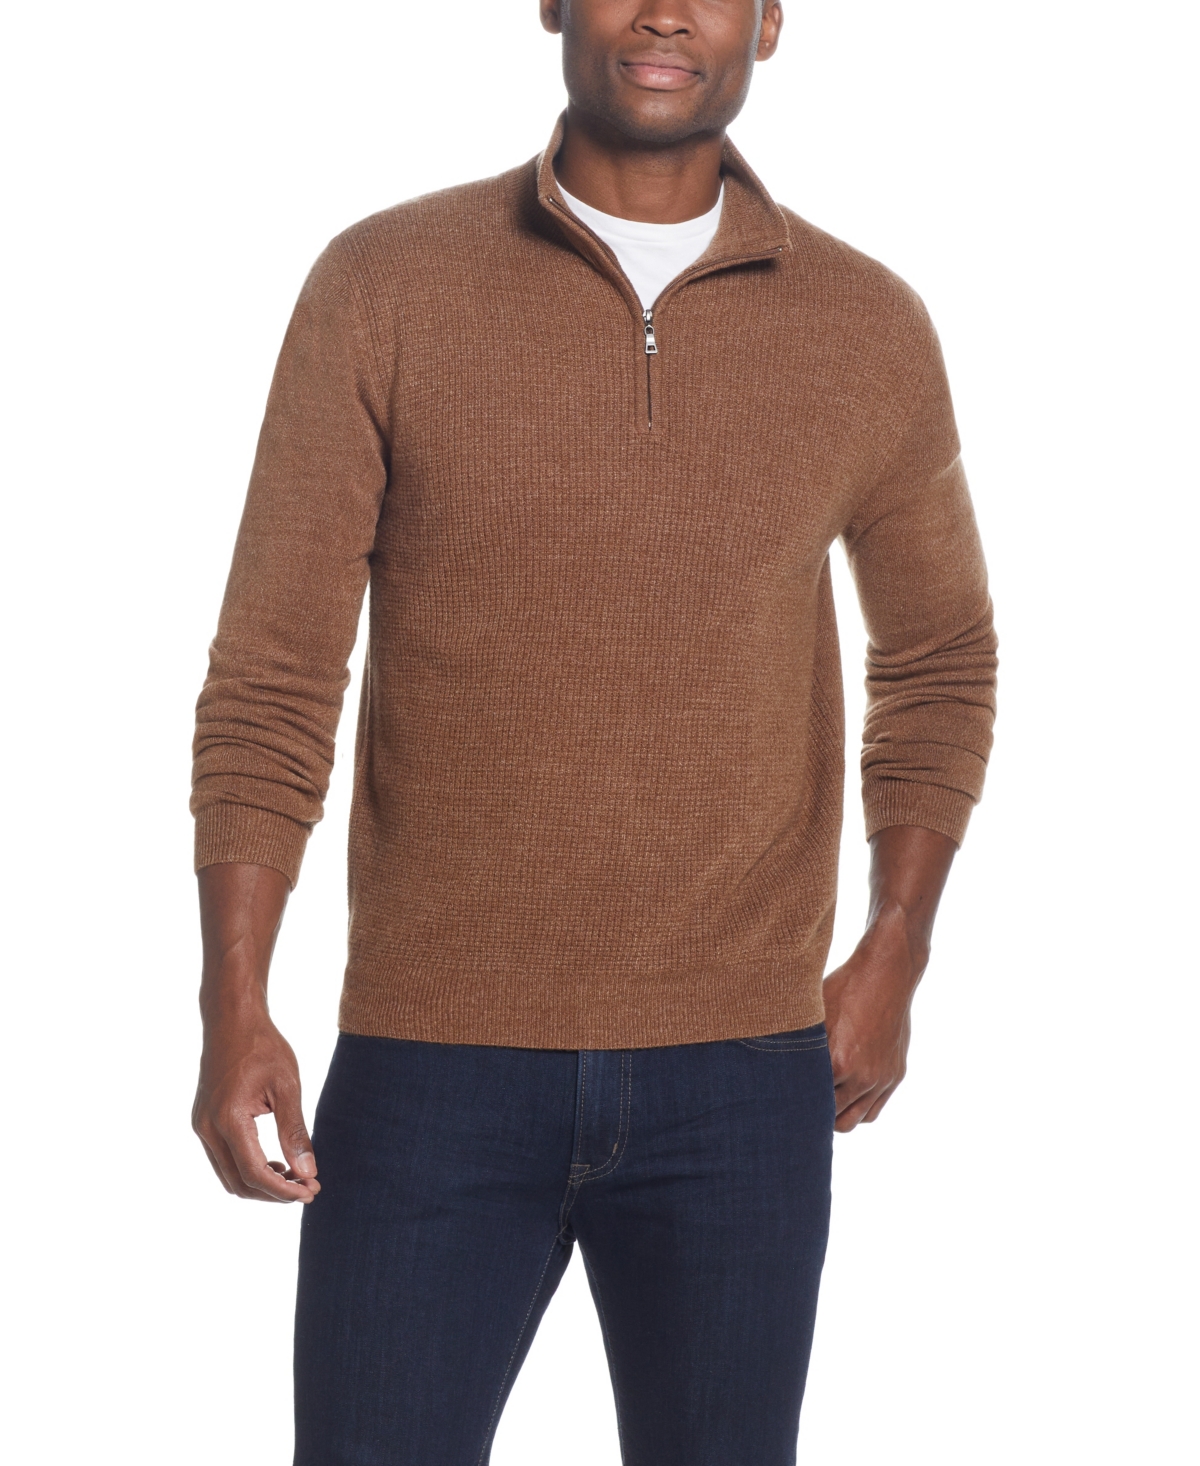 Men's Soft Touch Textured Quarter-Zip Sweater - Almond Heather